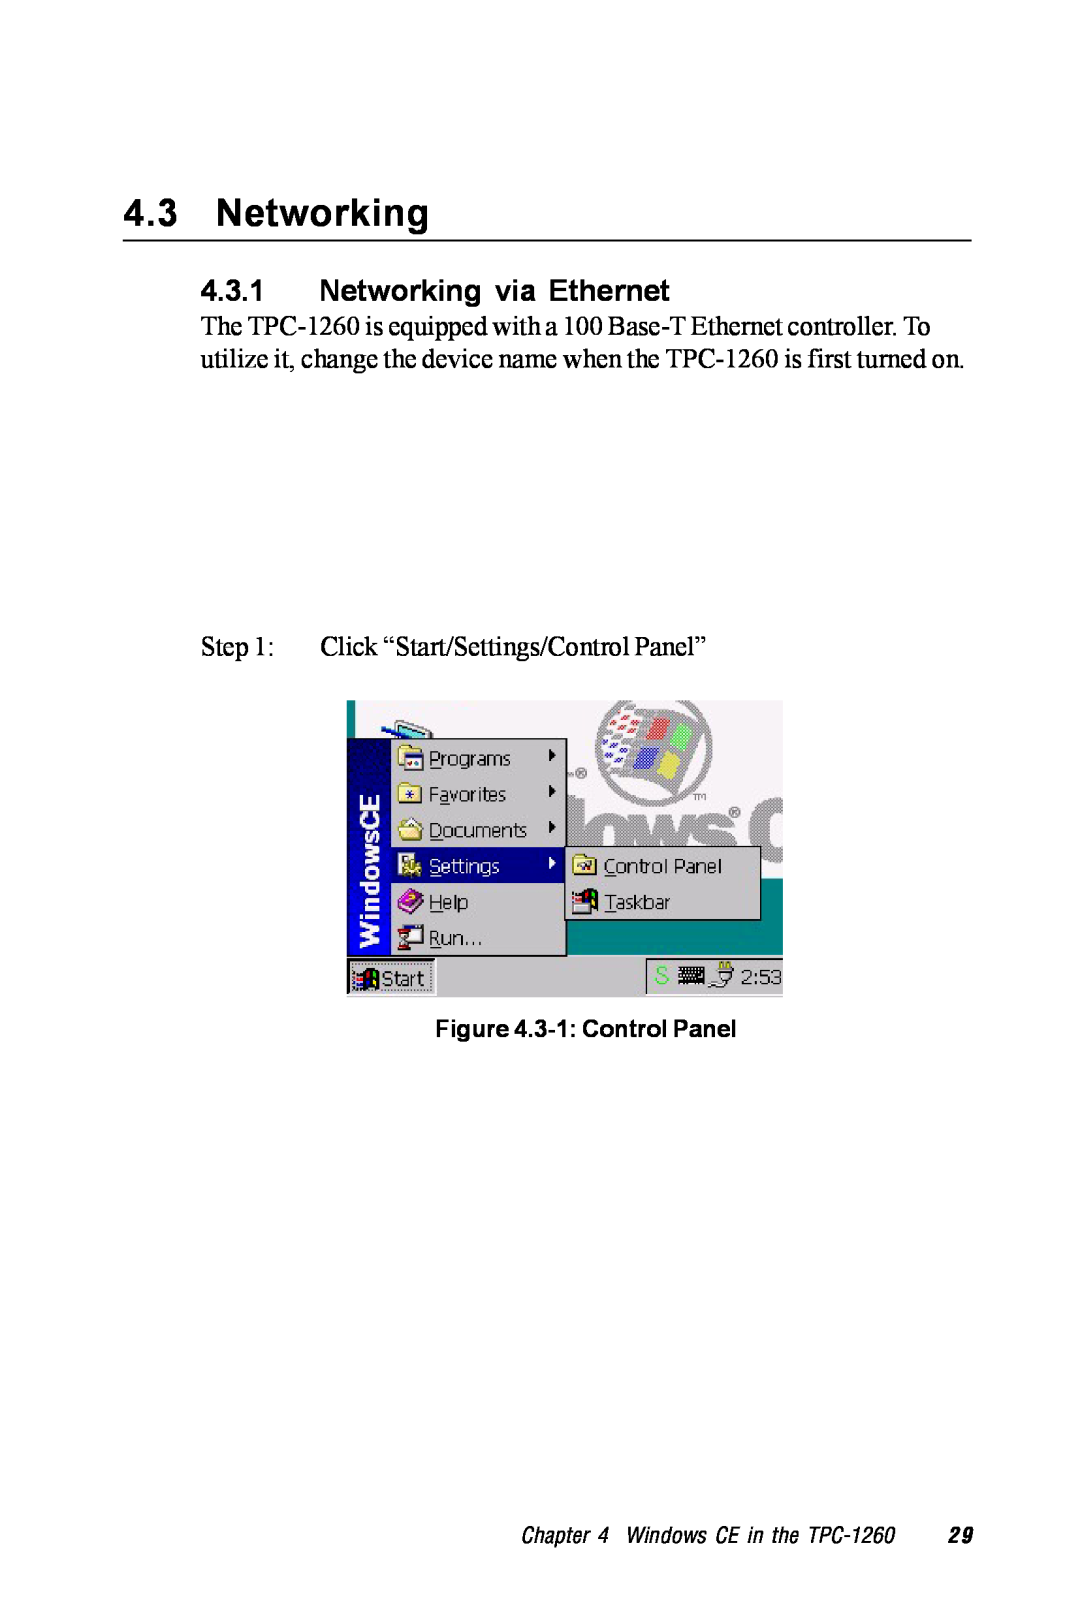 Advantech manual Networking via Ethernet, 3-1 Control Panel, Windows CE in the TPC-1260 